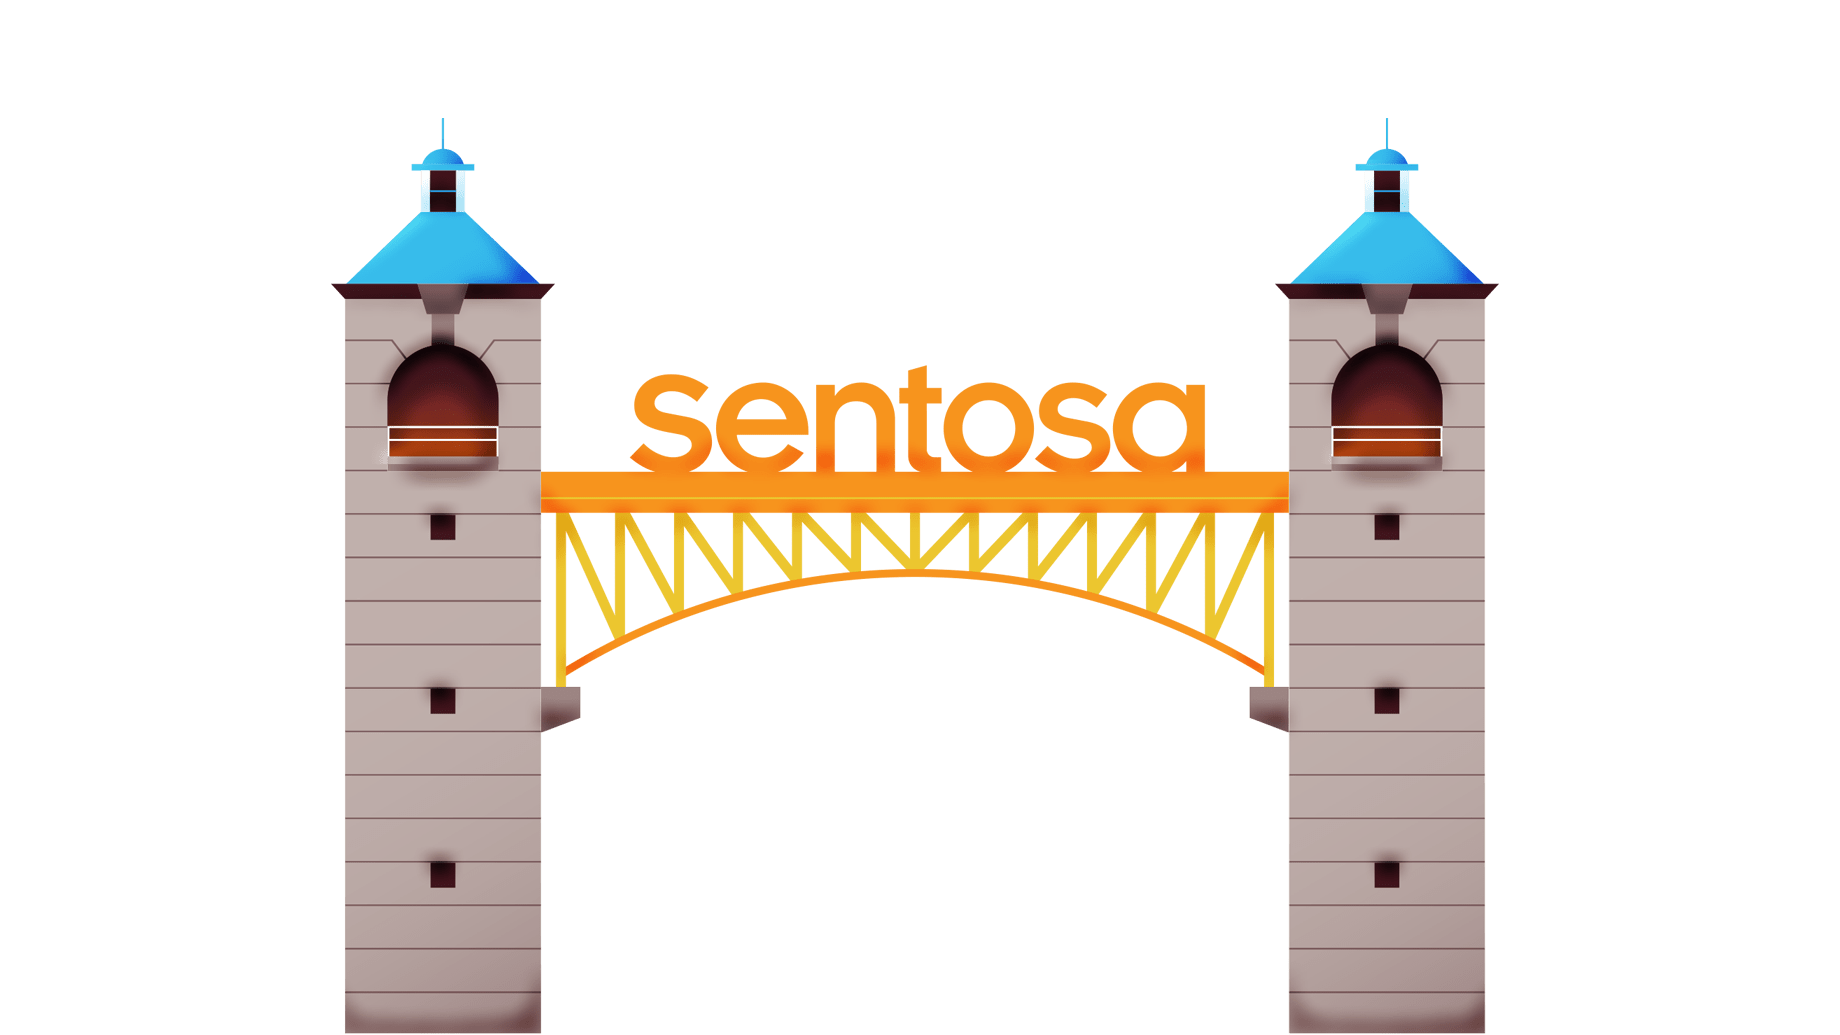 sentosa illustrations_sentosa gateway